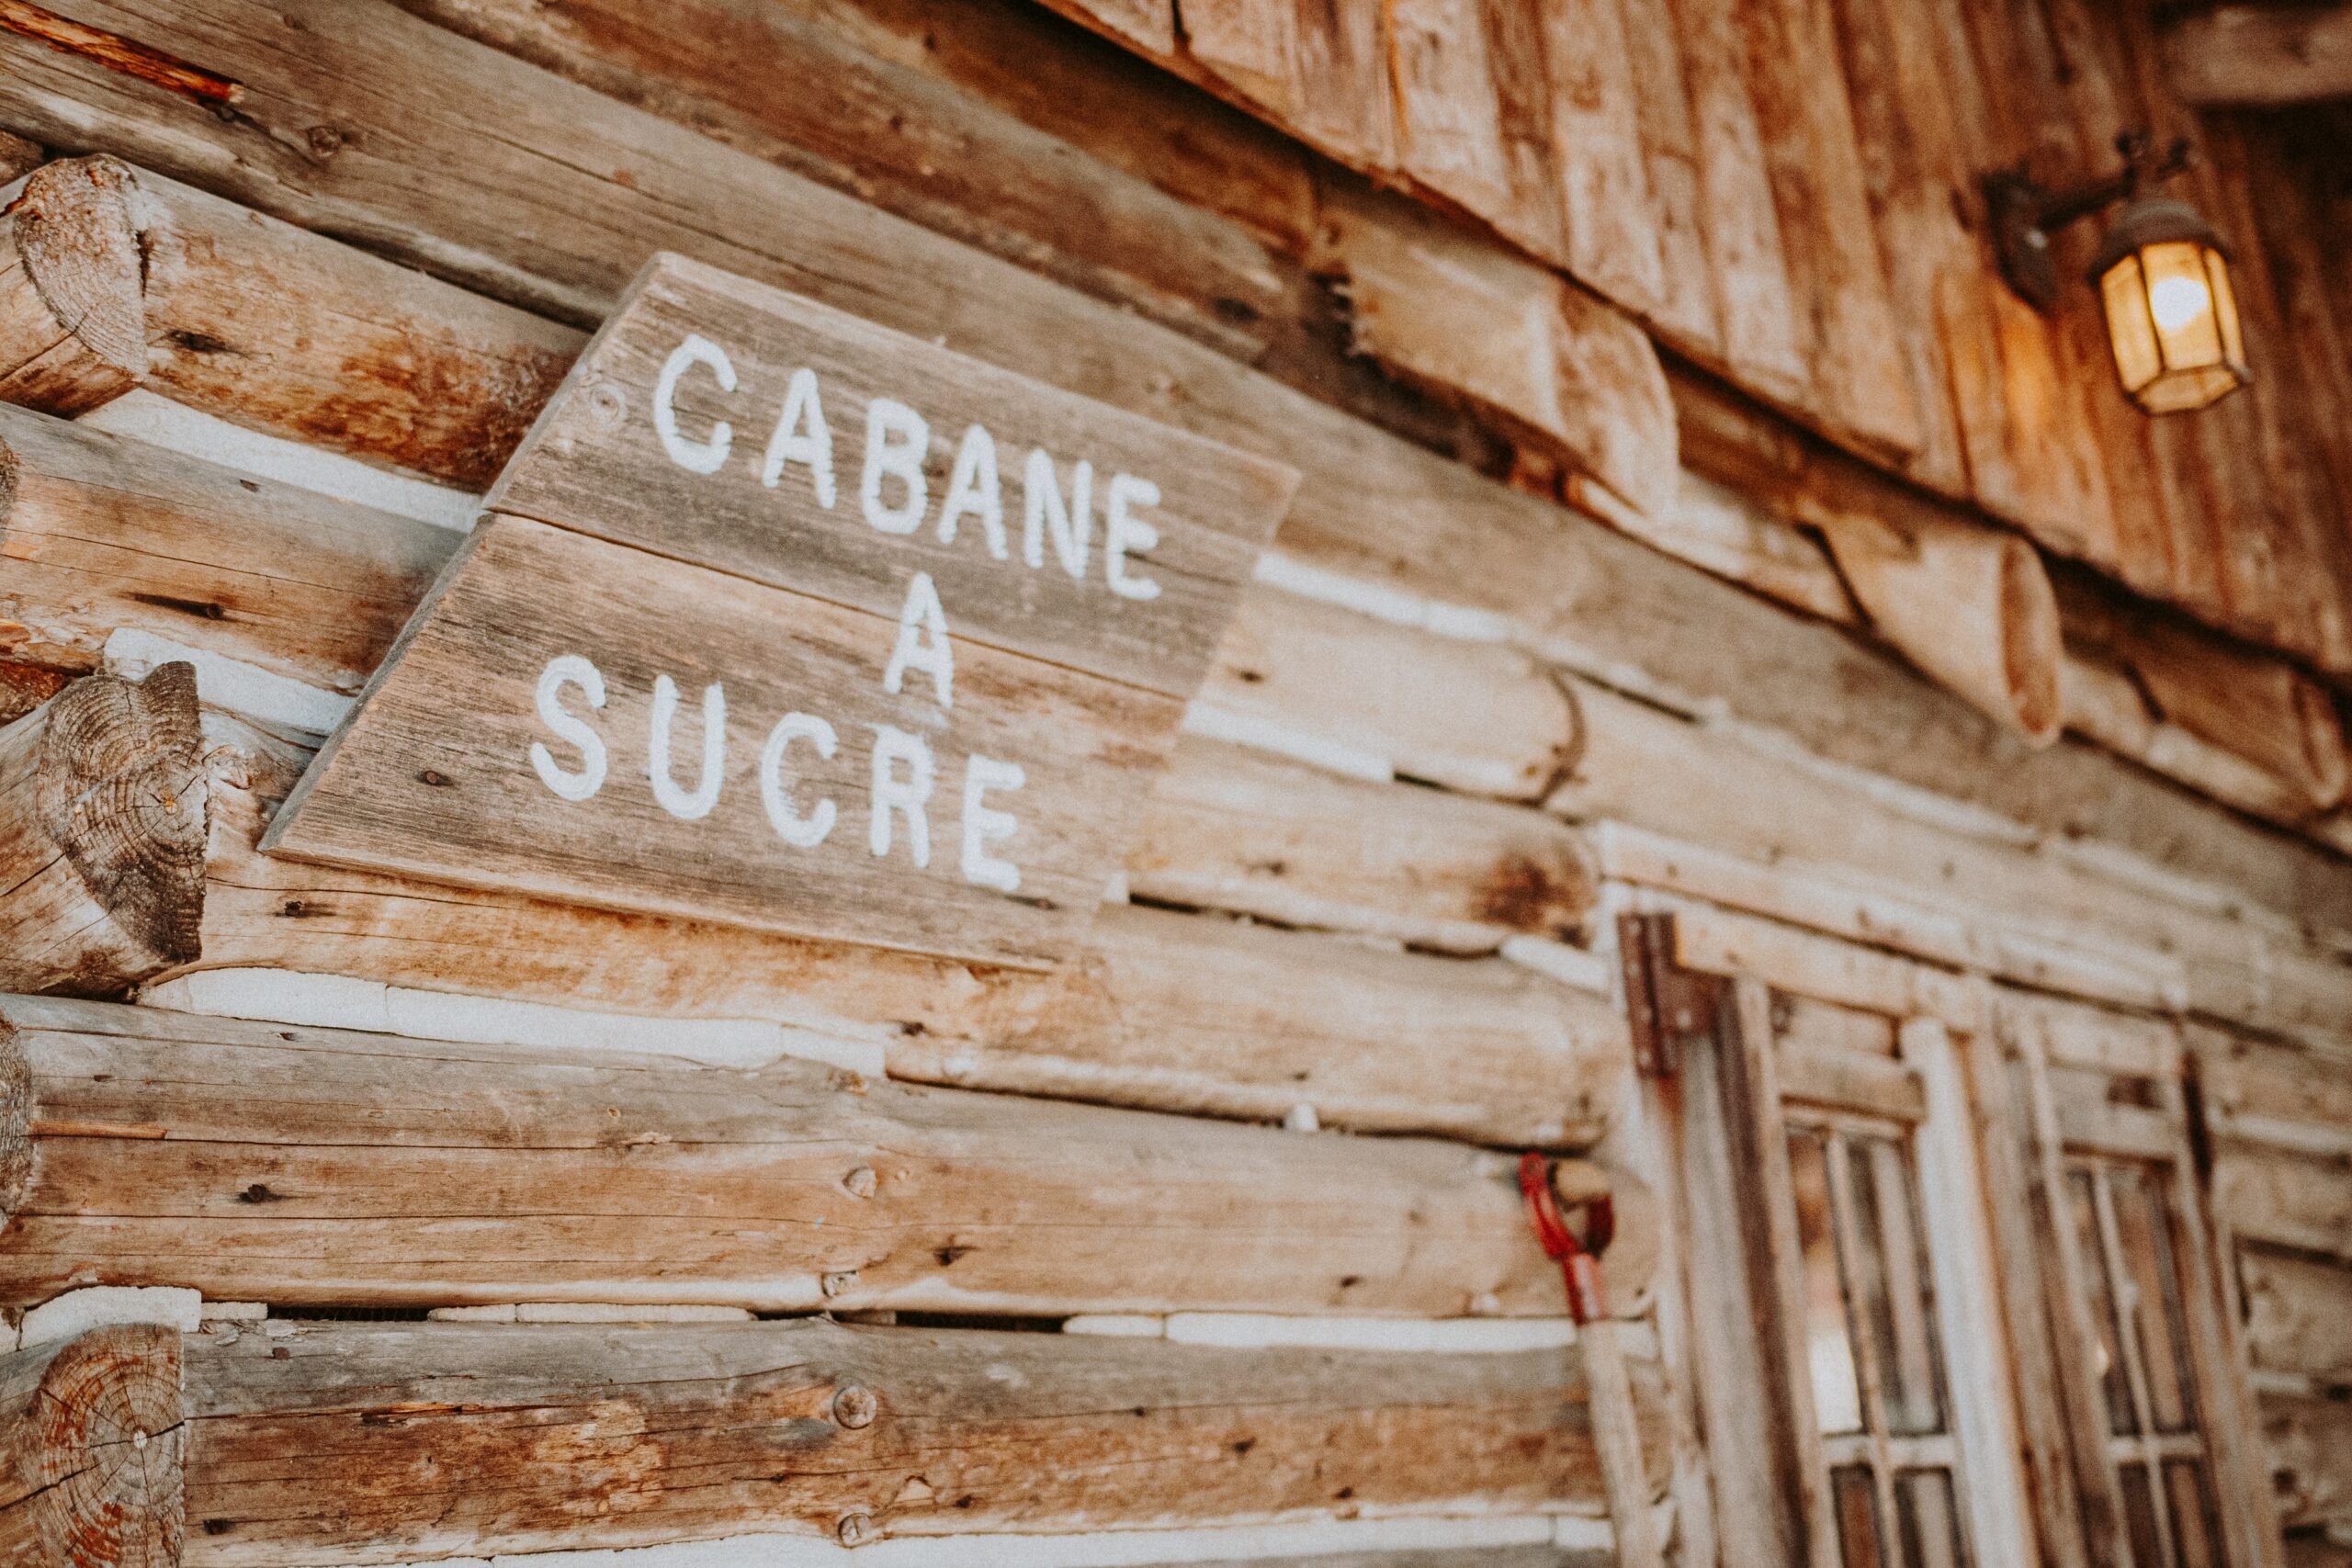 Cabane a sucre painted on a log cabin; sugar shack, Quebec